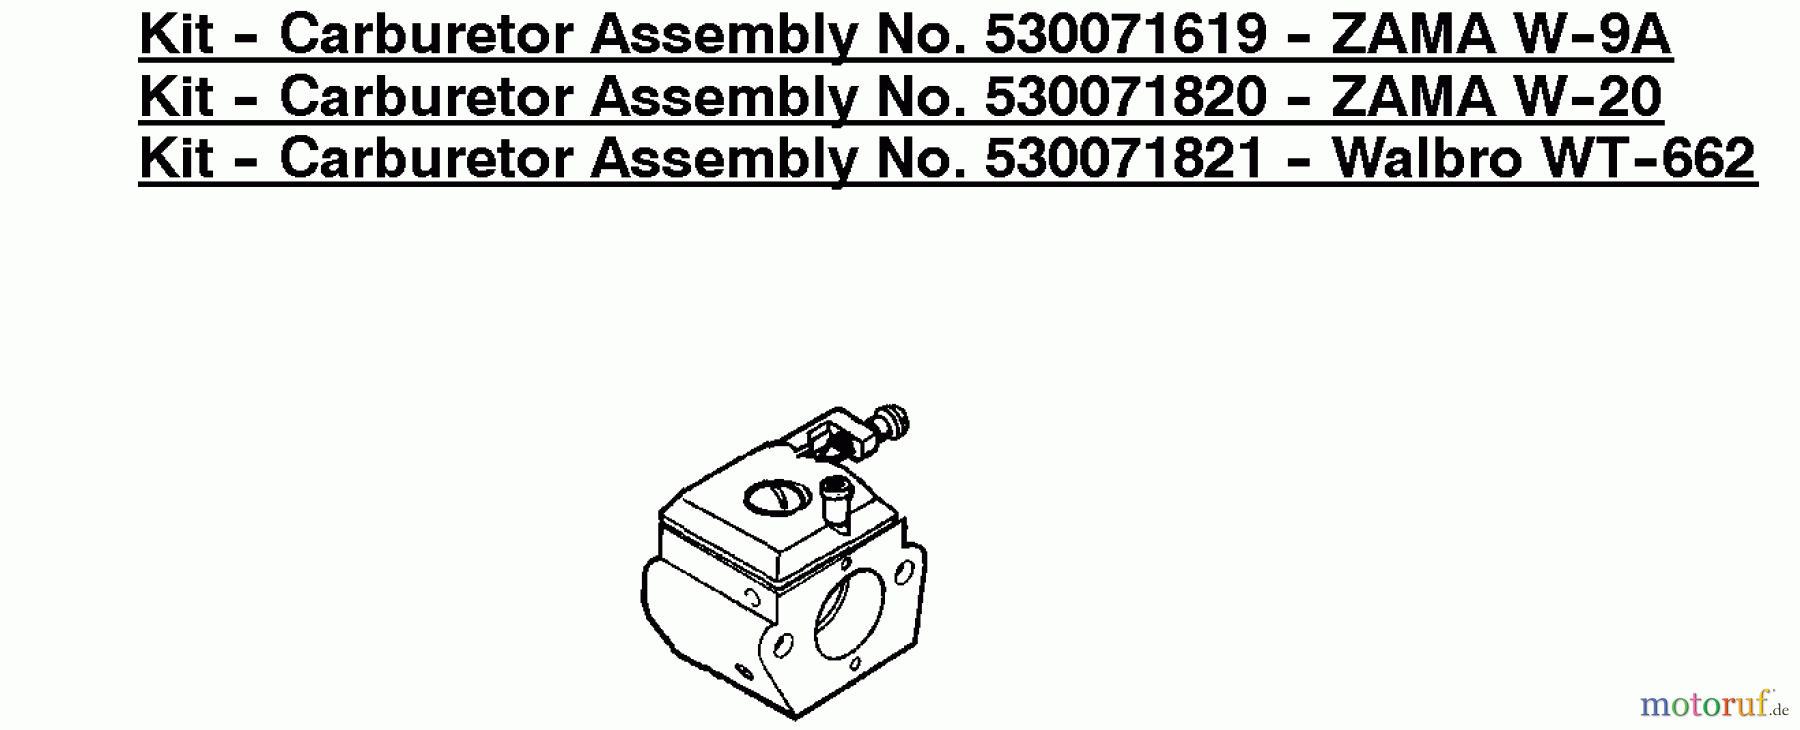  Poulan / Weed Eater Motorsägen 2250LE (Type 2) - Poulan Woodmaster Chainsaw Kit - Carburetor Assembly